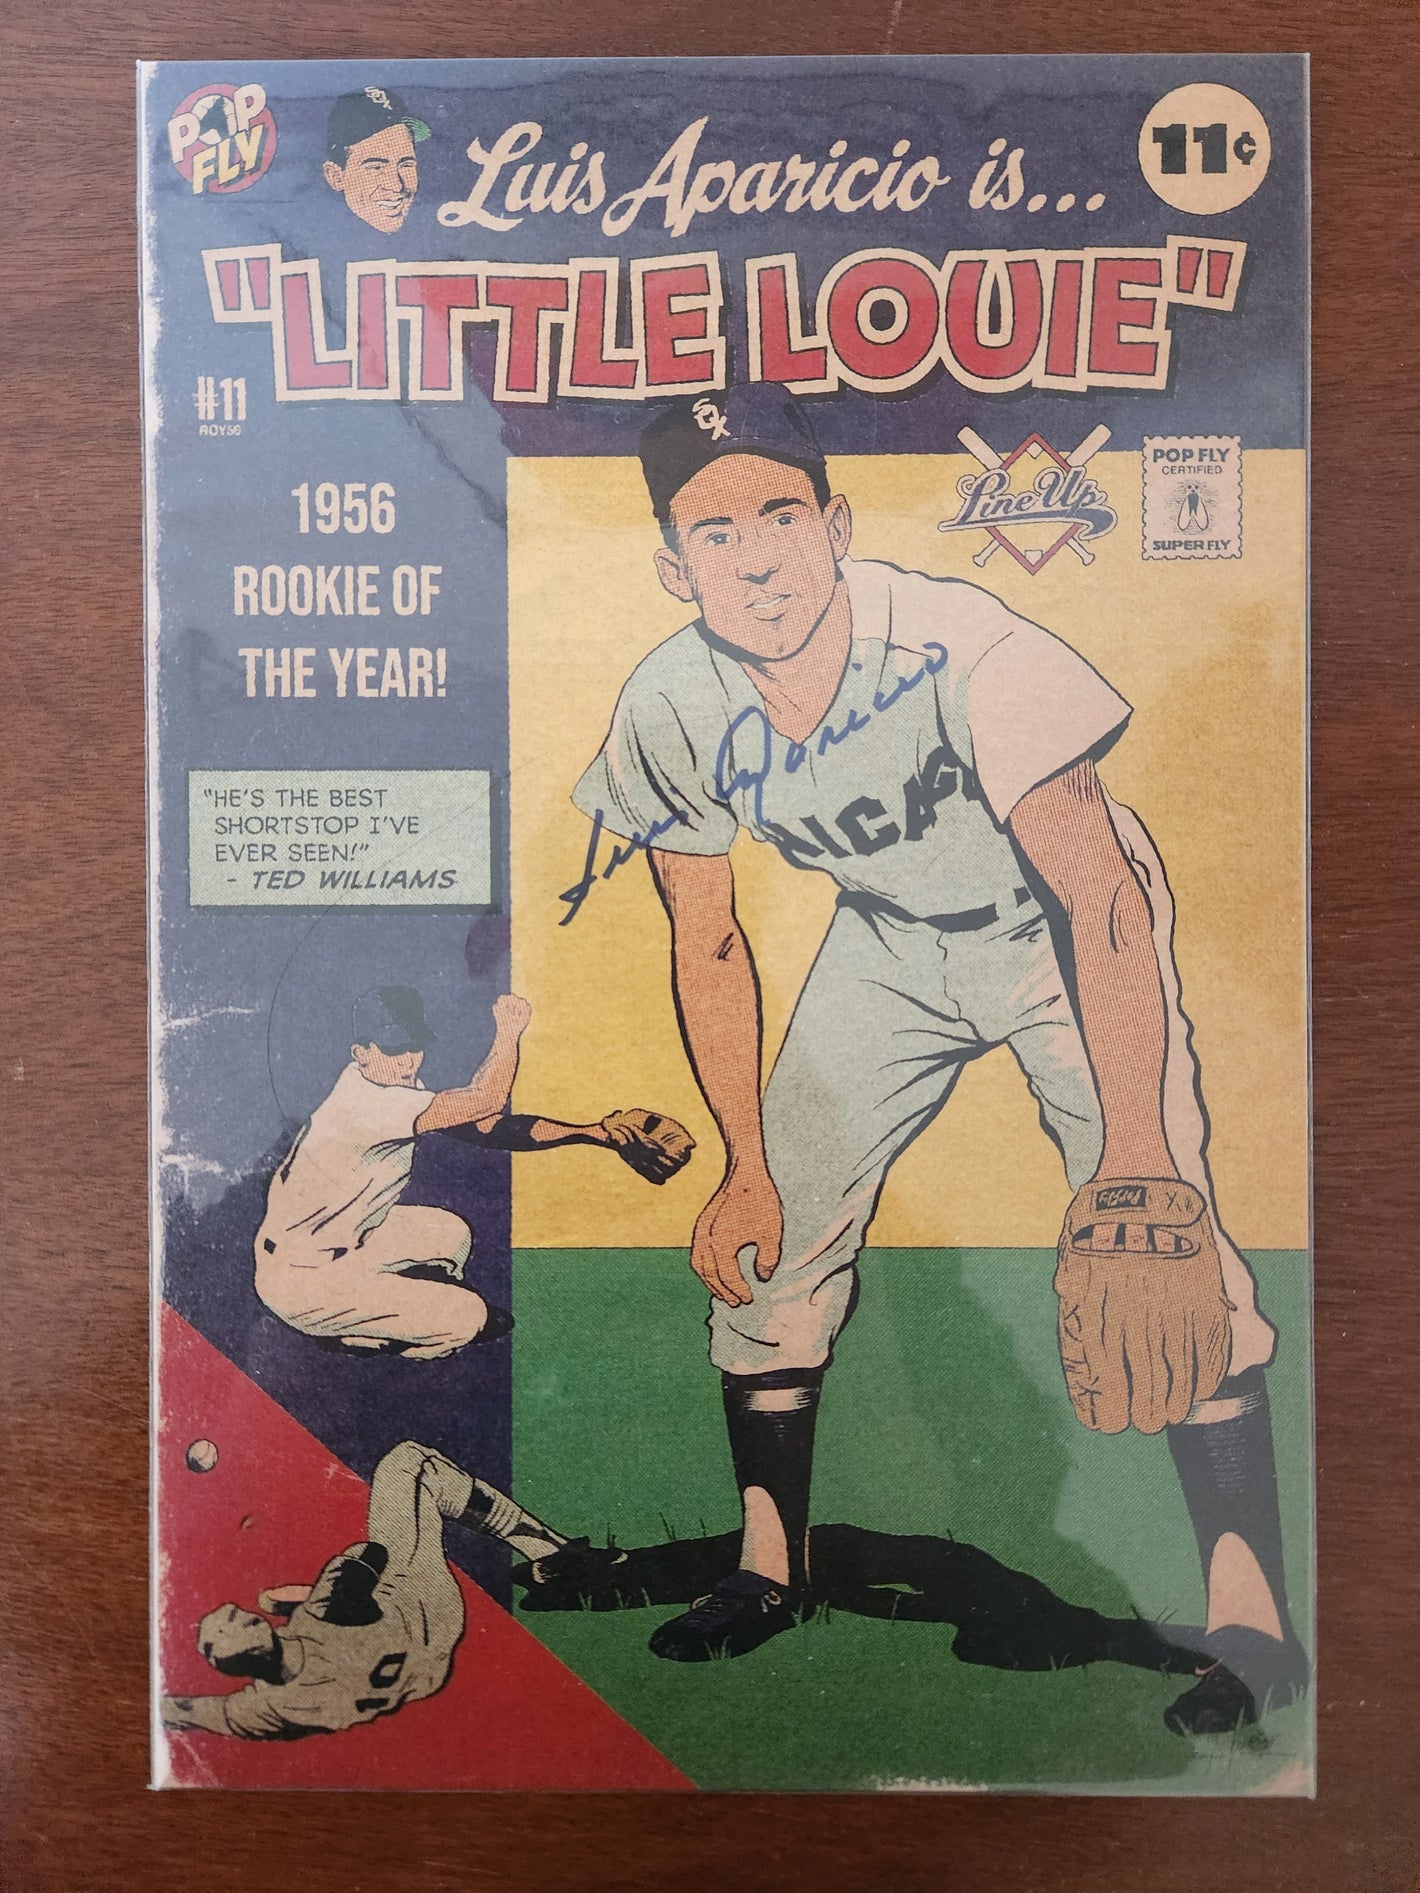 "Little Louie" Luis Aparicio Pop Fly Pop Shop Print #37 – Signed by Luis Aparicio & Daniel Jacob Horine